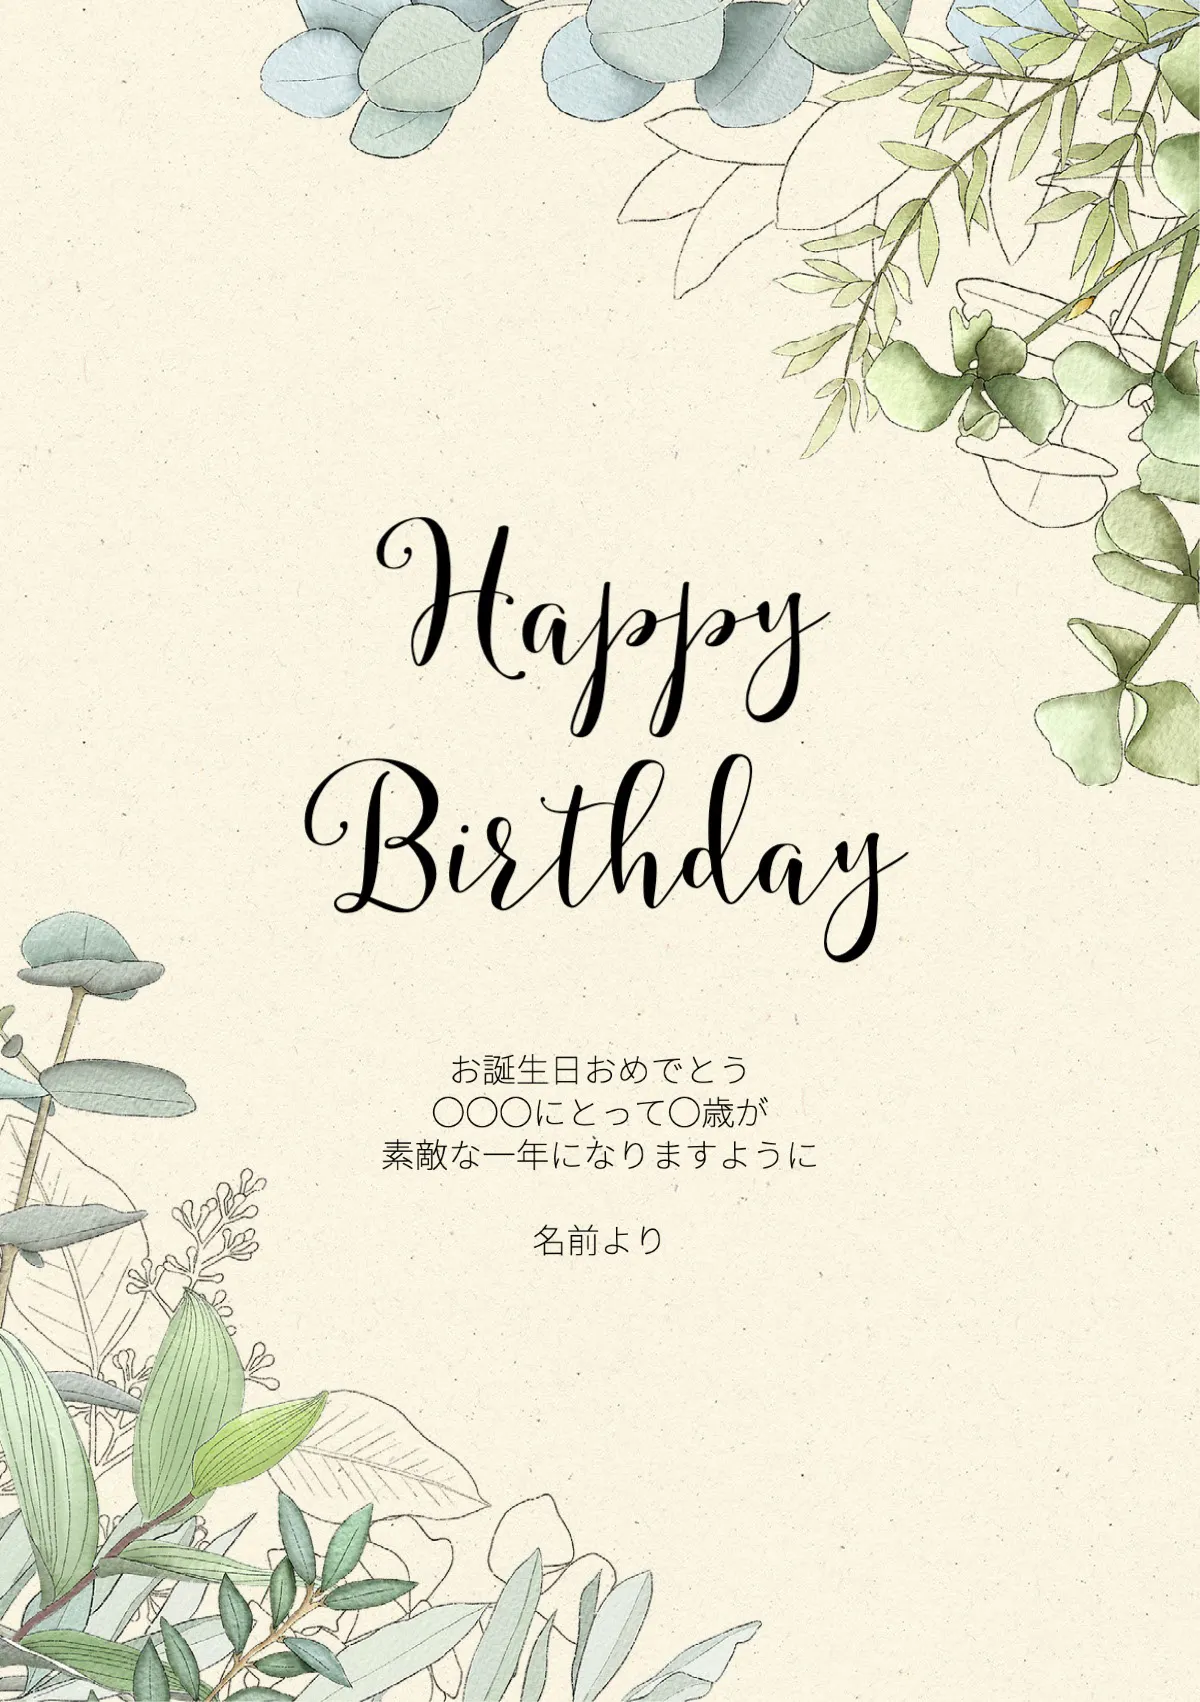 Foliage birthday Message Card